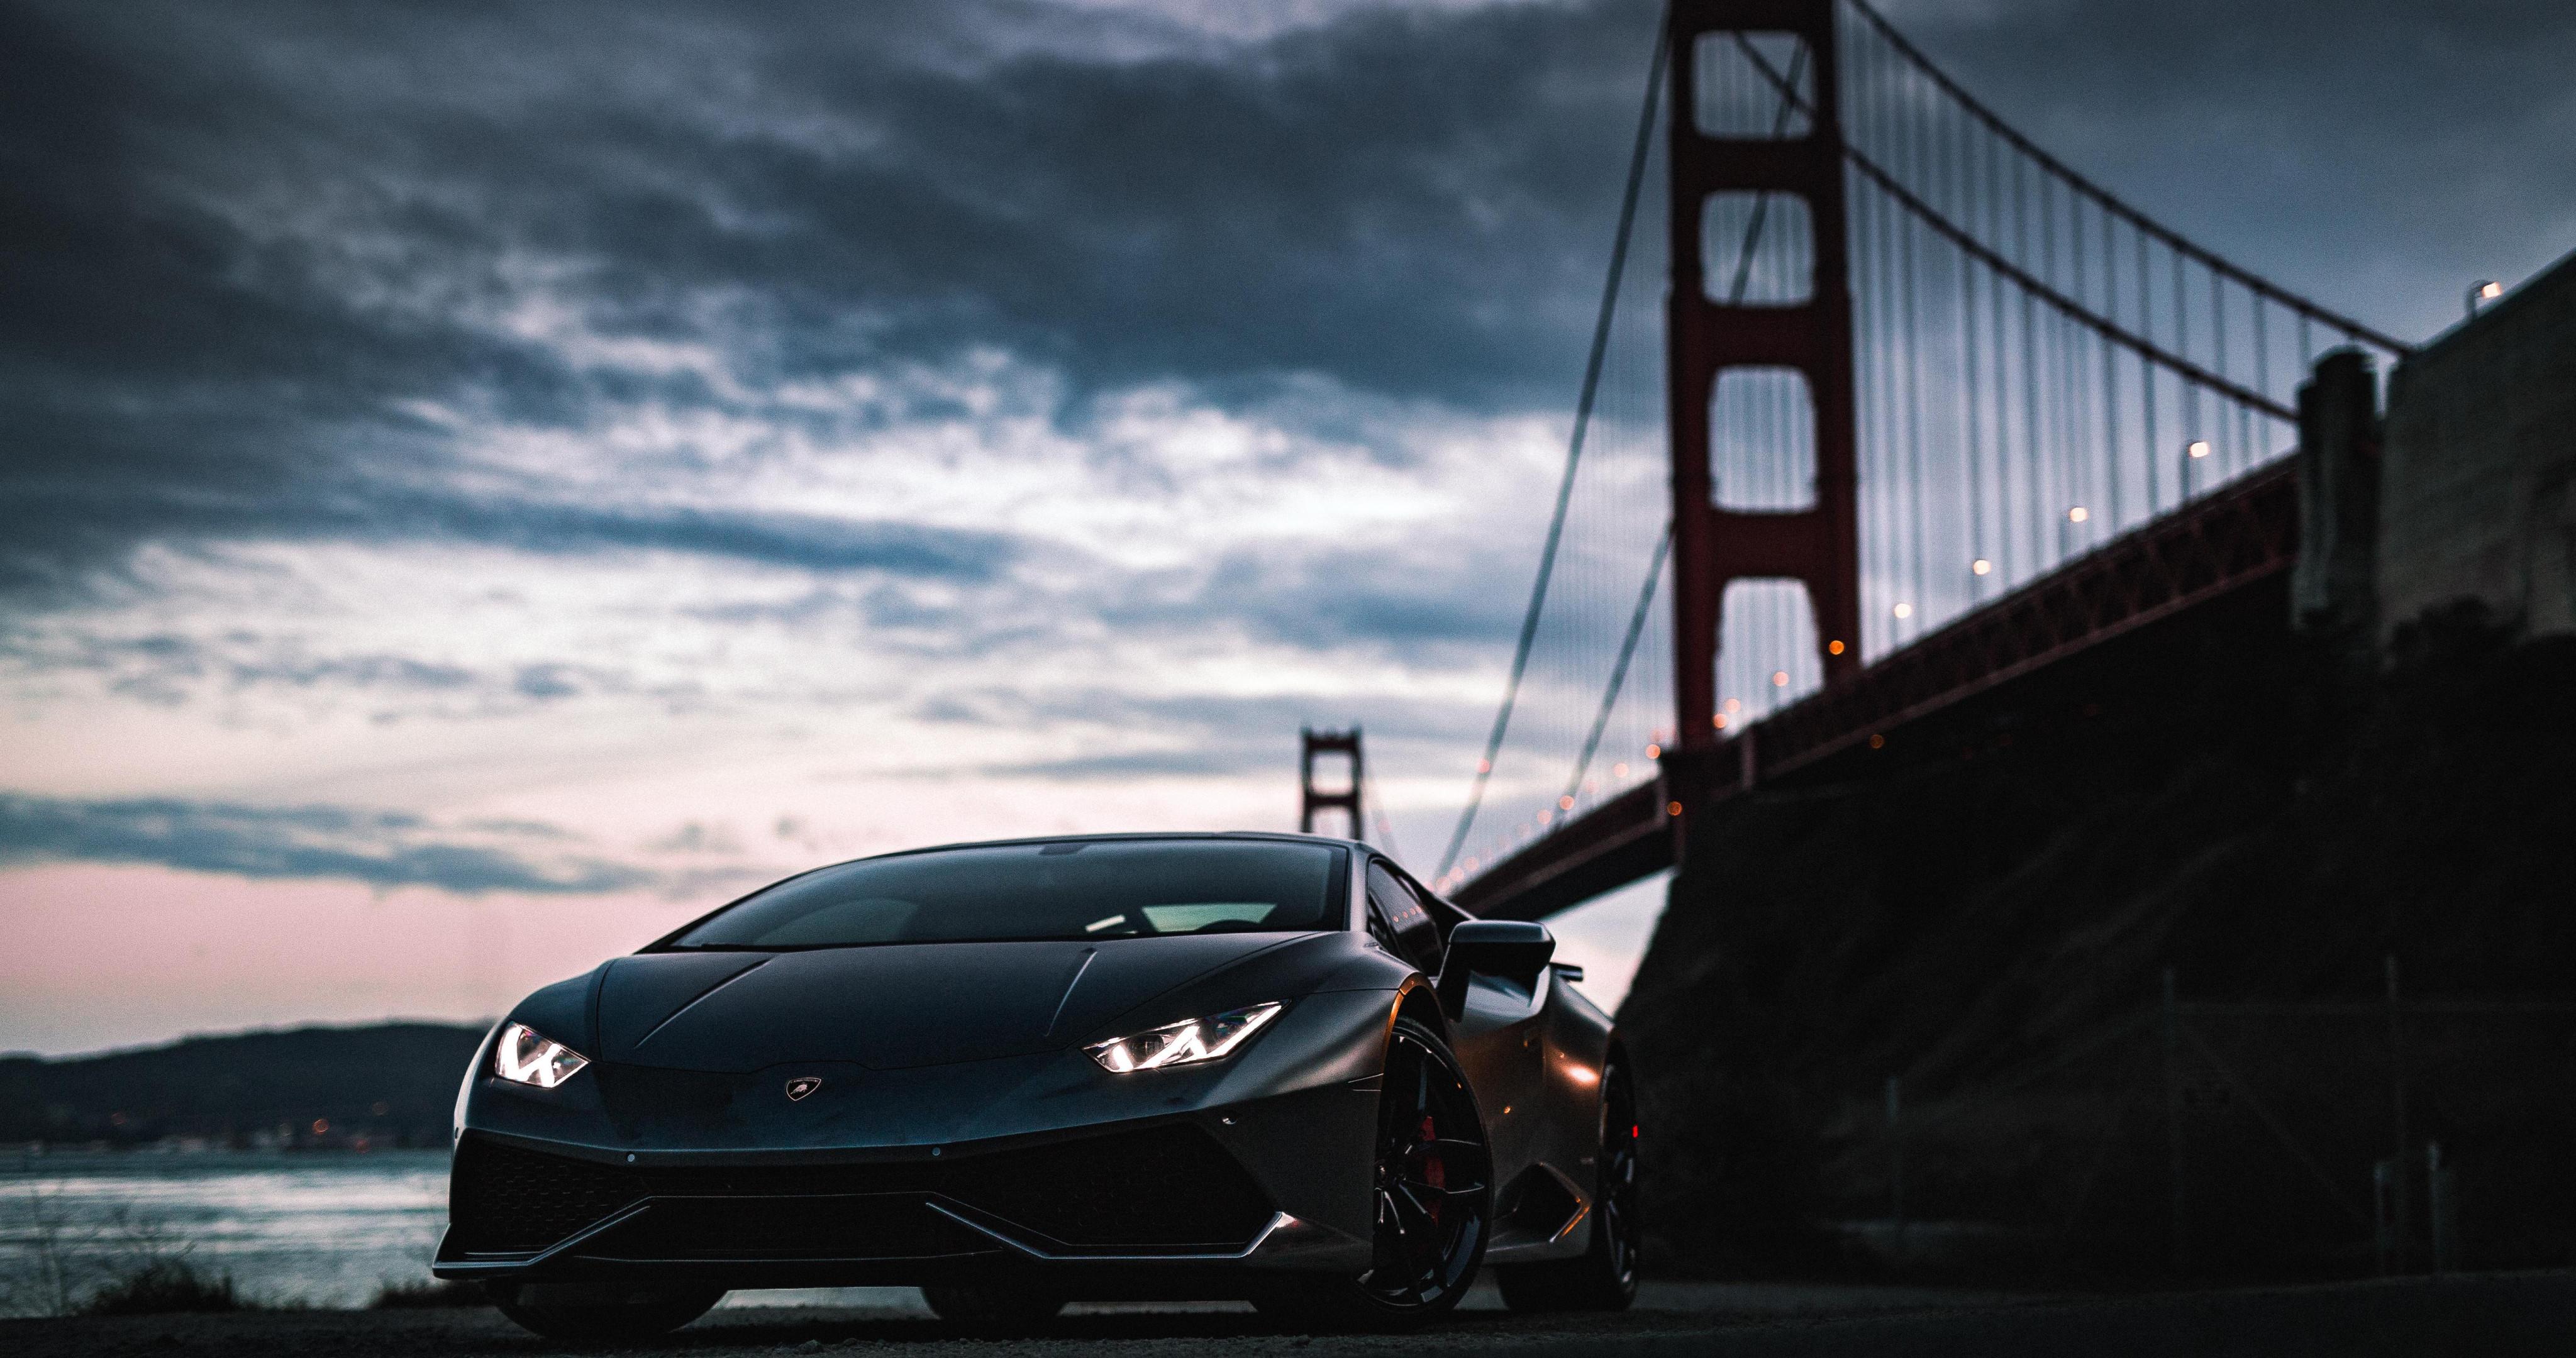 4096 x 2160 · jpeg - Lamborghini Beautiful Black Sport Car in USA 4096x2160 4K - Wallpaper ...